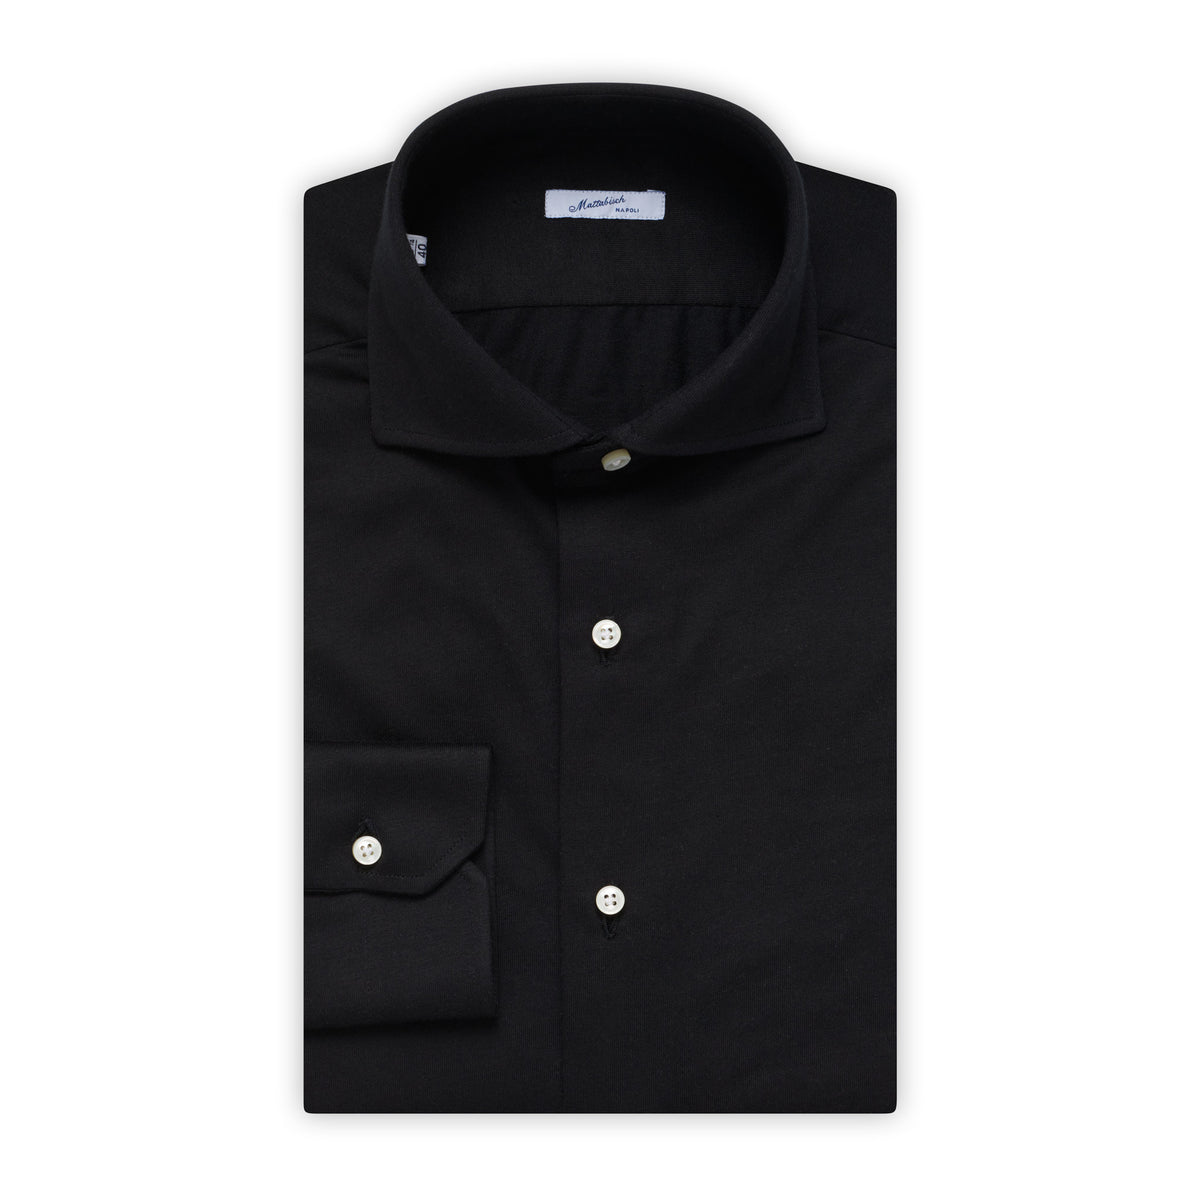 MATTABISCH by Kiton Handmade Solid Black Jersey Shirt EU 40 NEW US 15.75 Slim